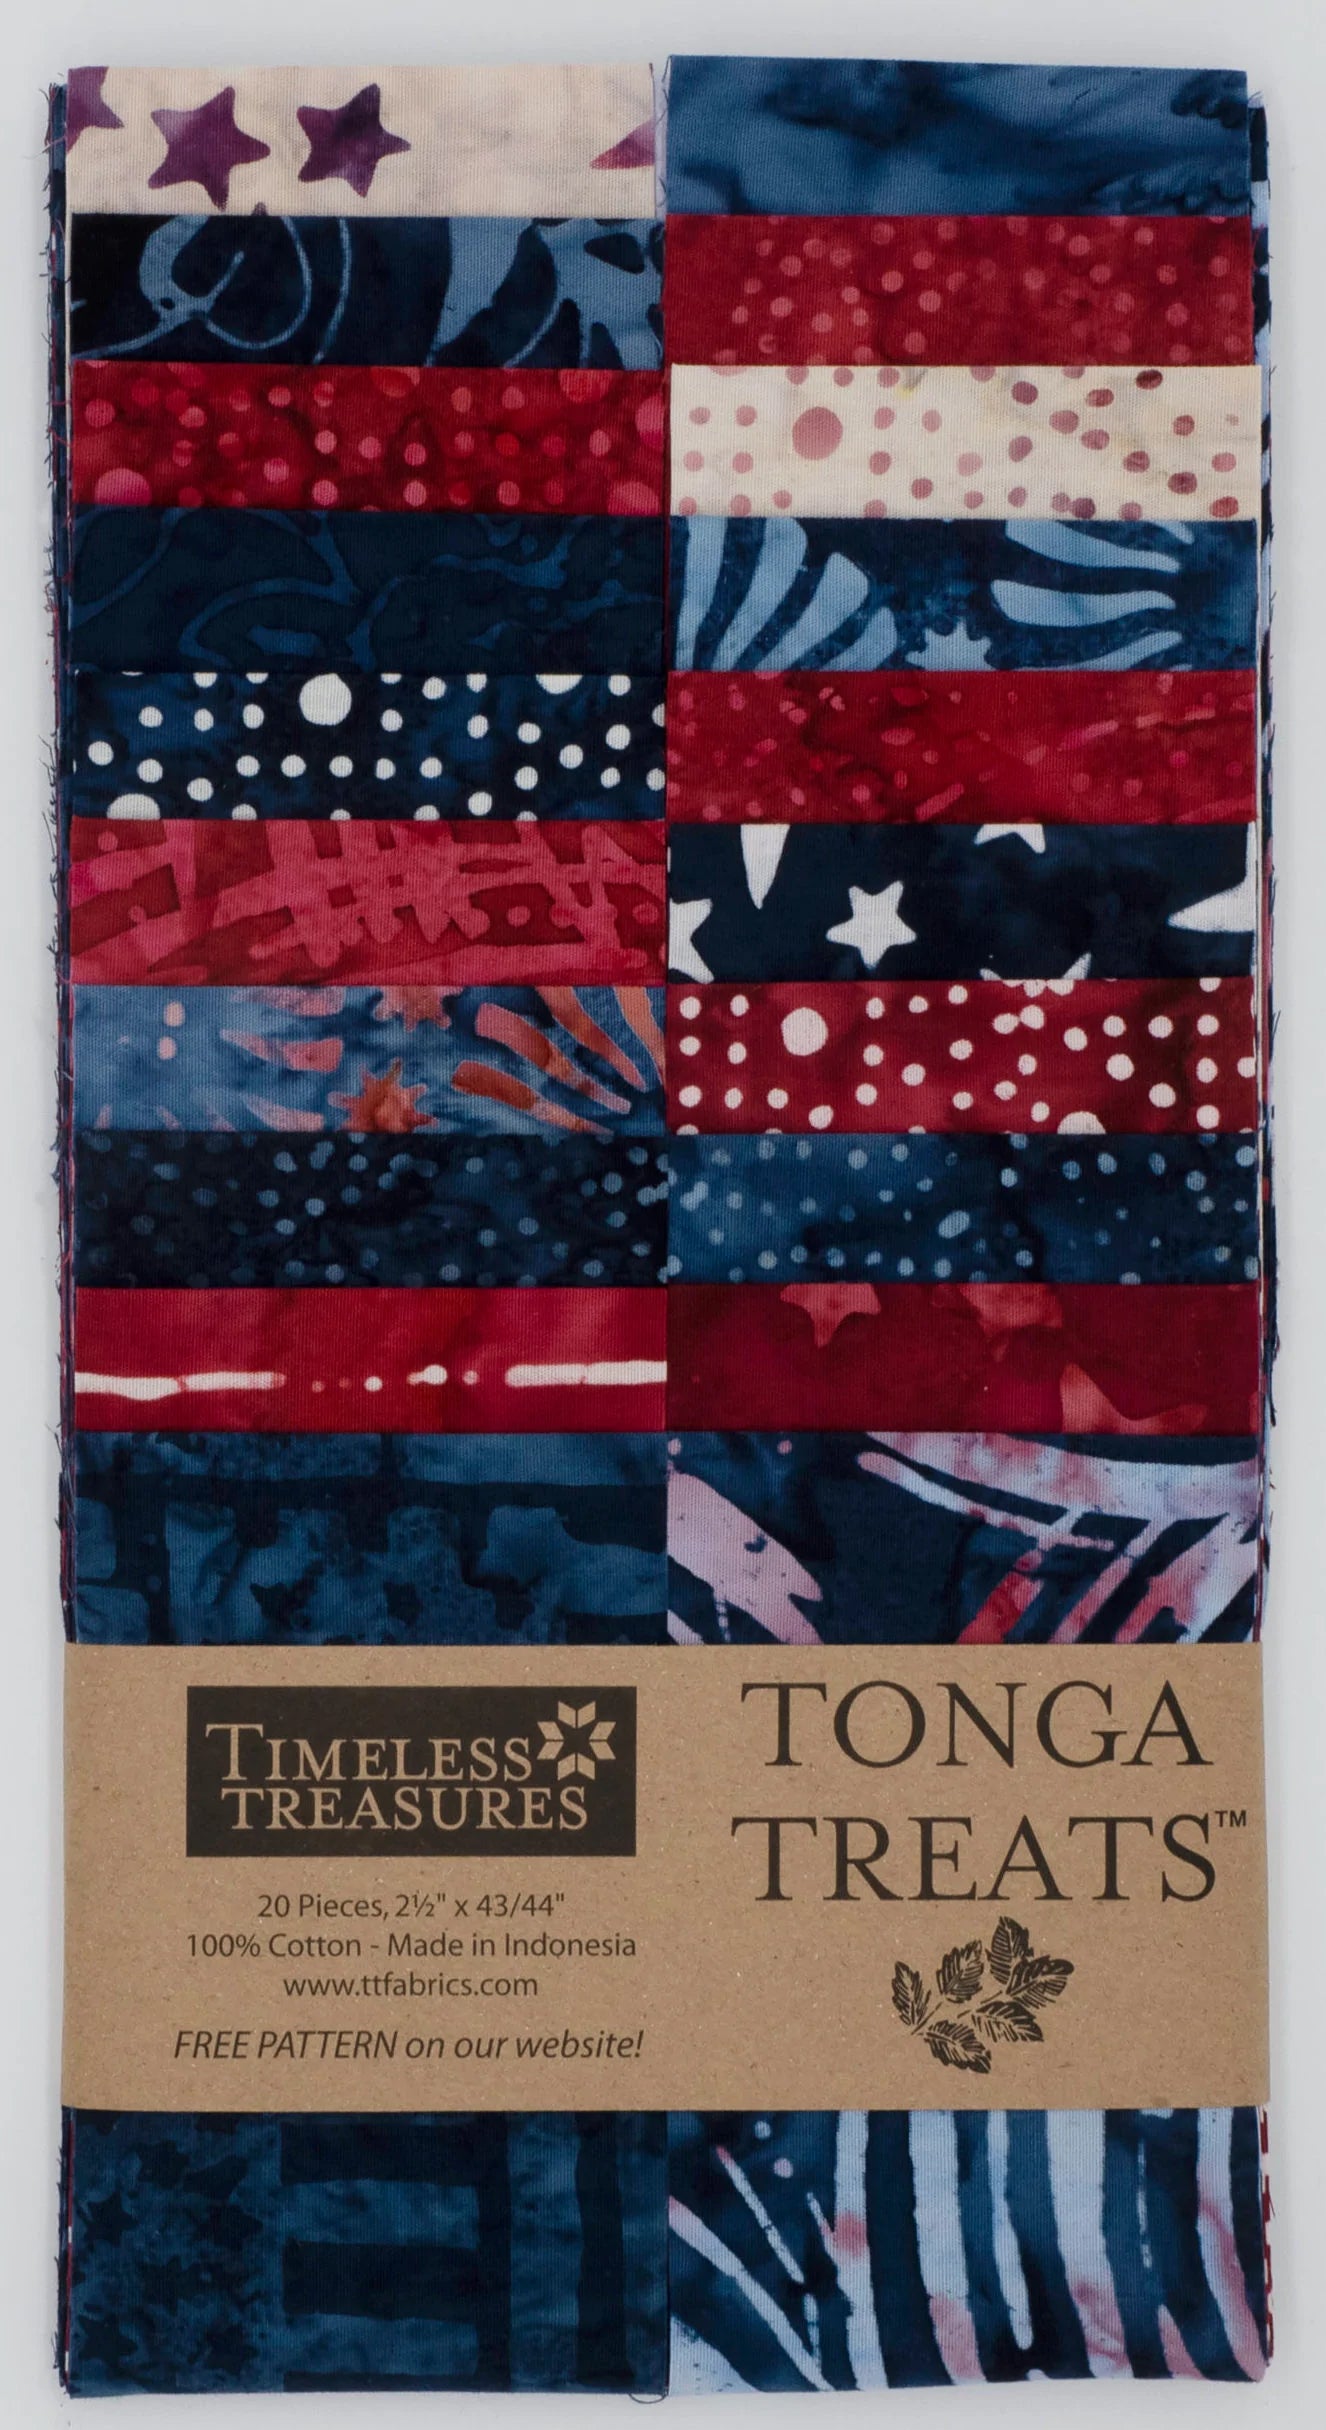 Timeless Treasures Tonga Treats Junior - Firework